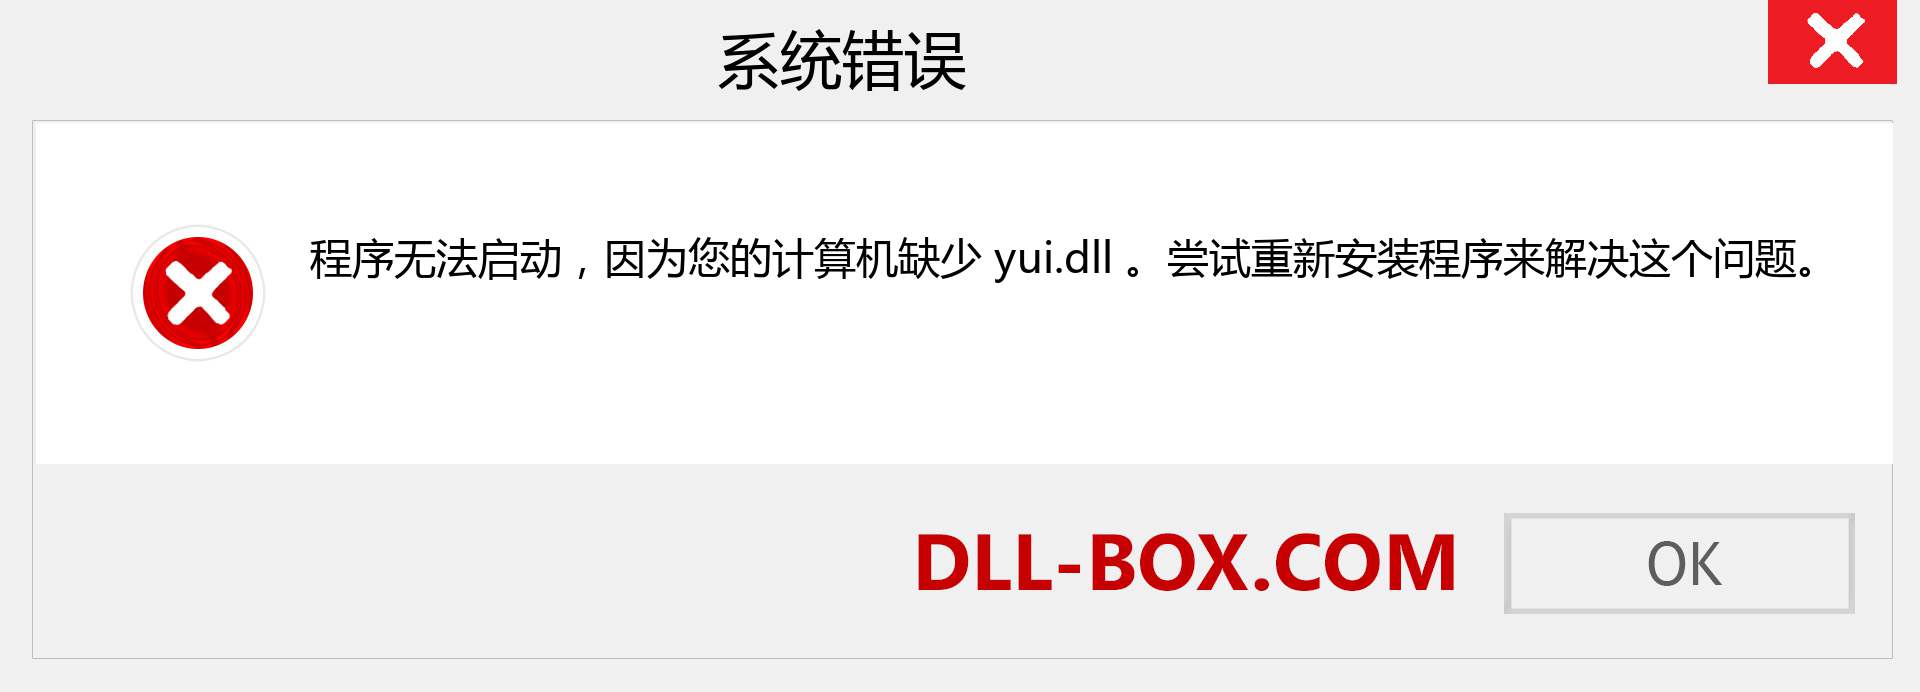 yui.dll 文件丢失？。 适用于 Windows 7、8、10 的下载 - 修复 Windows、照片、图像上的 yui dll 丢失错误